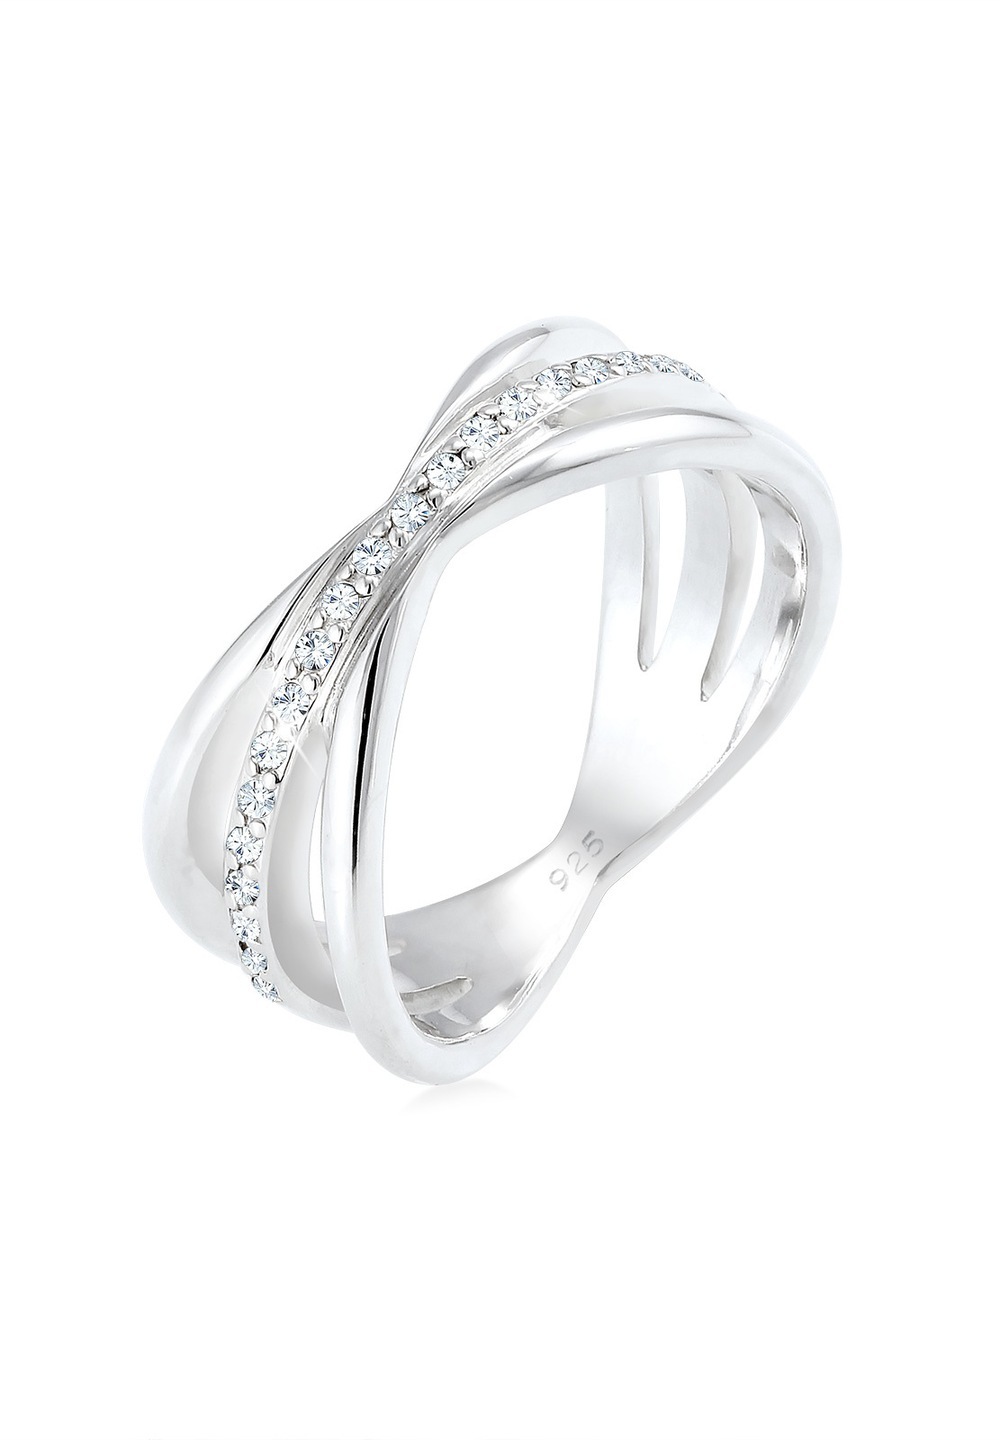 Elli PREMIUM Elli PREMIUM Elli PREMIUM Ring Dames Ring met Kristallen in 925 Sterling Zilver Rose Goud Plated Ringen